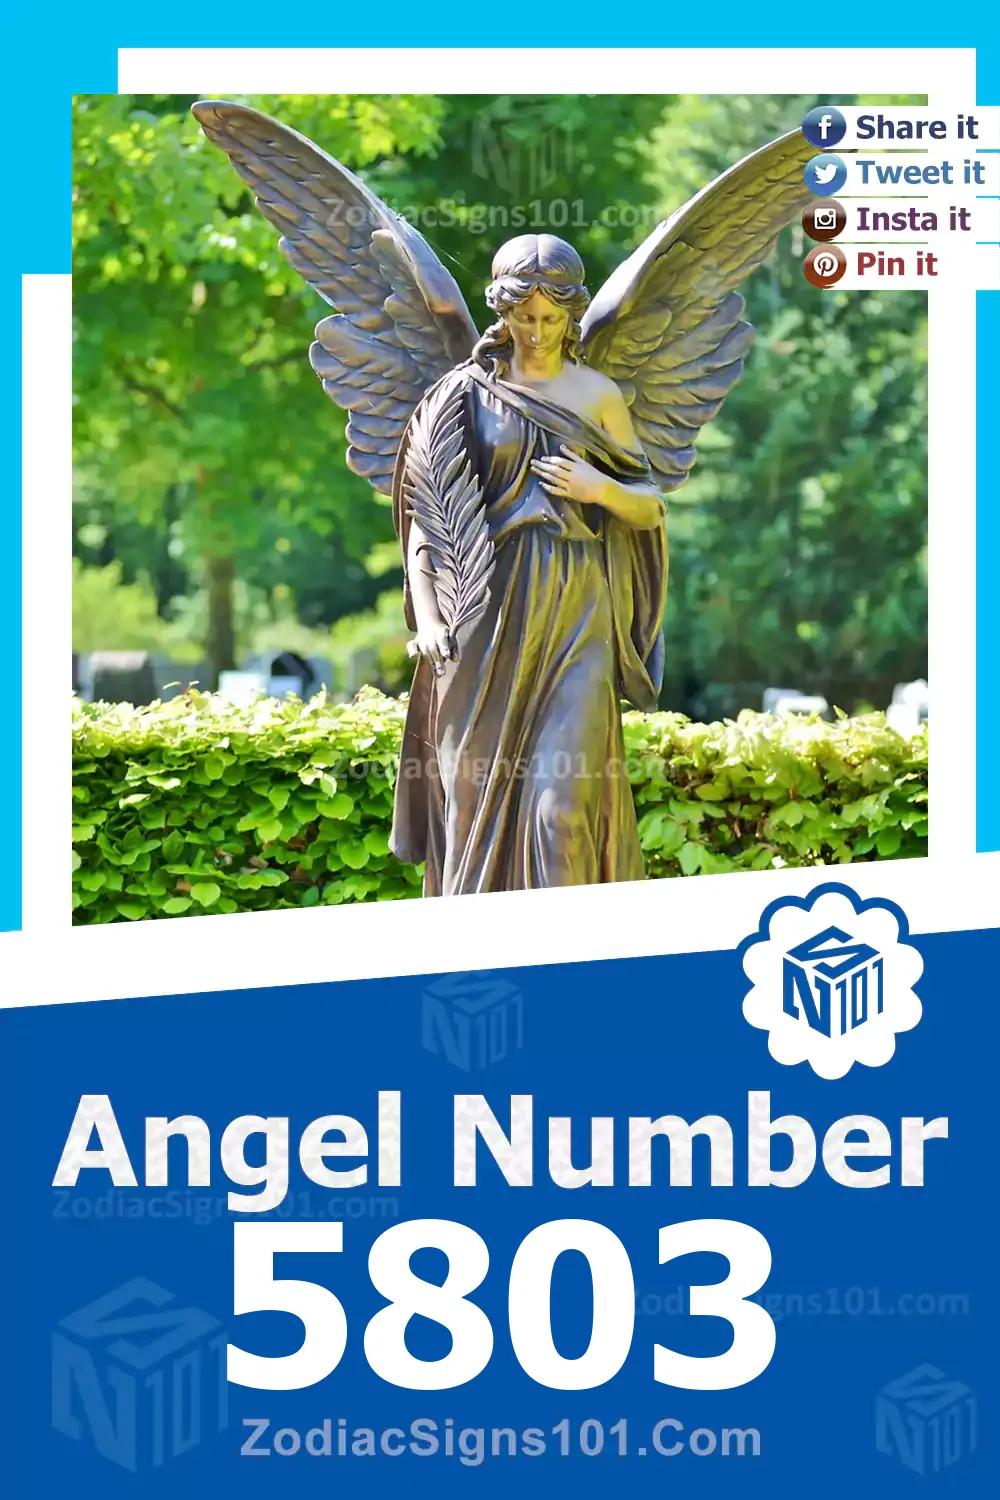 5803-Angel-Number-Meaning.jpg